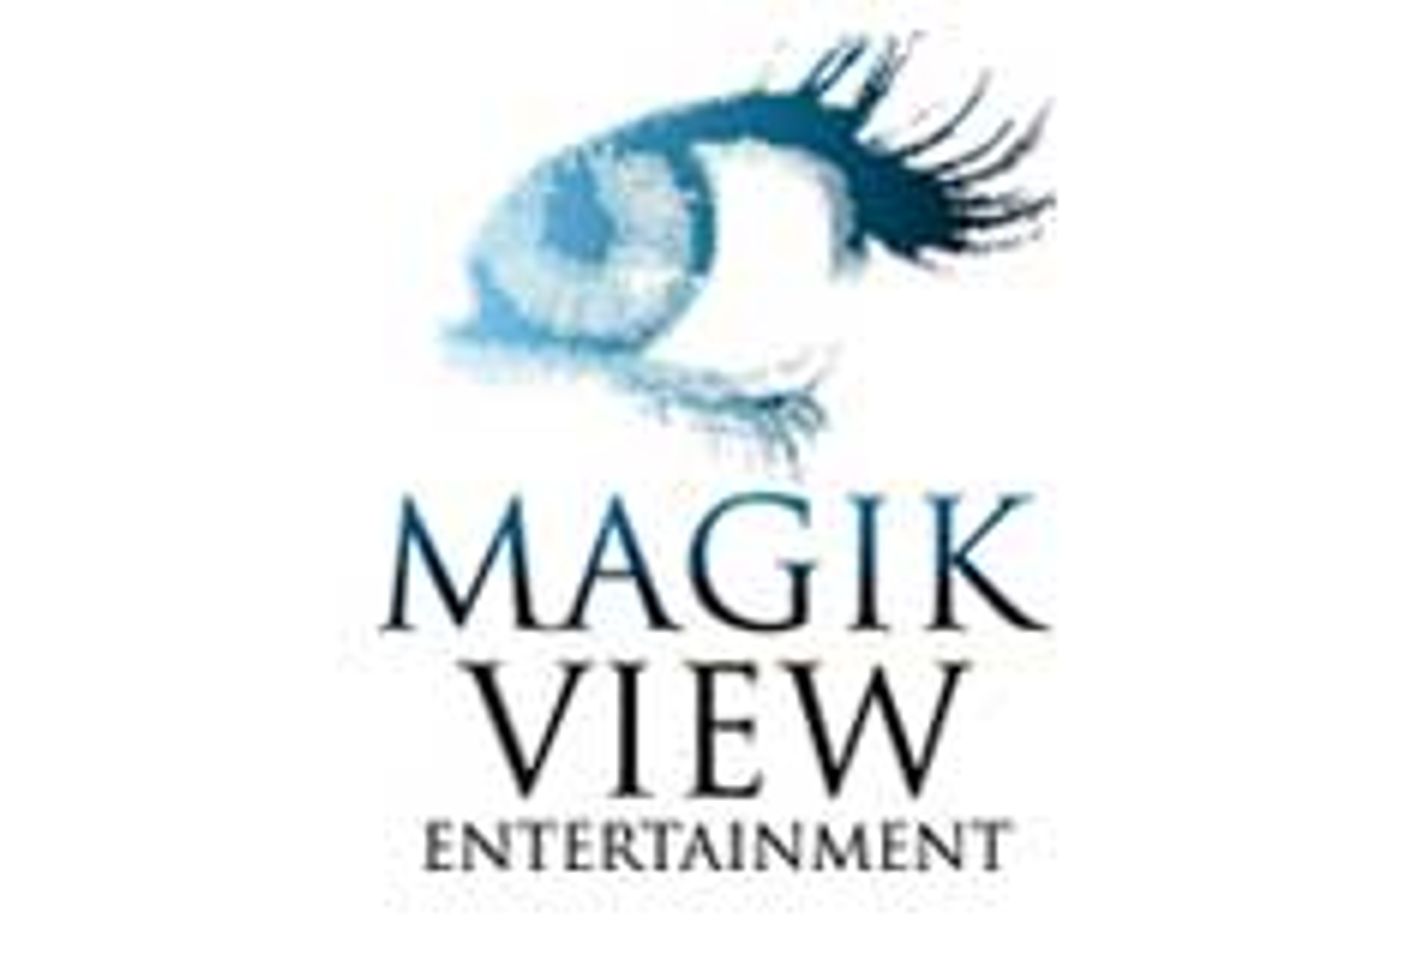 Private Media, Magik View Entertainment Win 3 AVN Awards